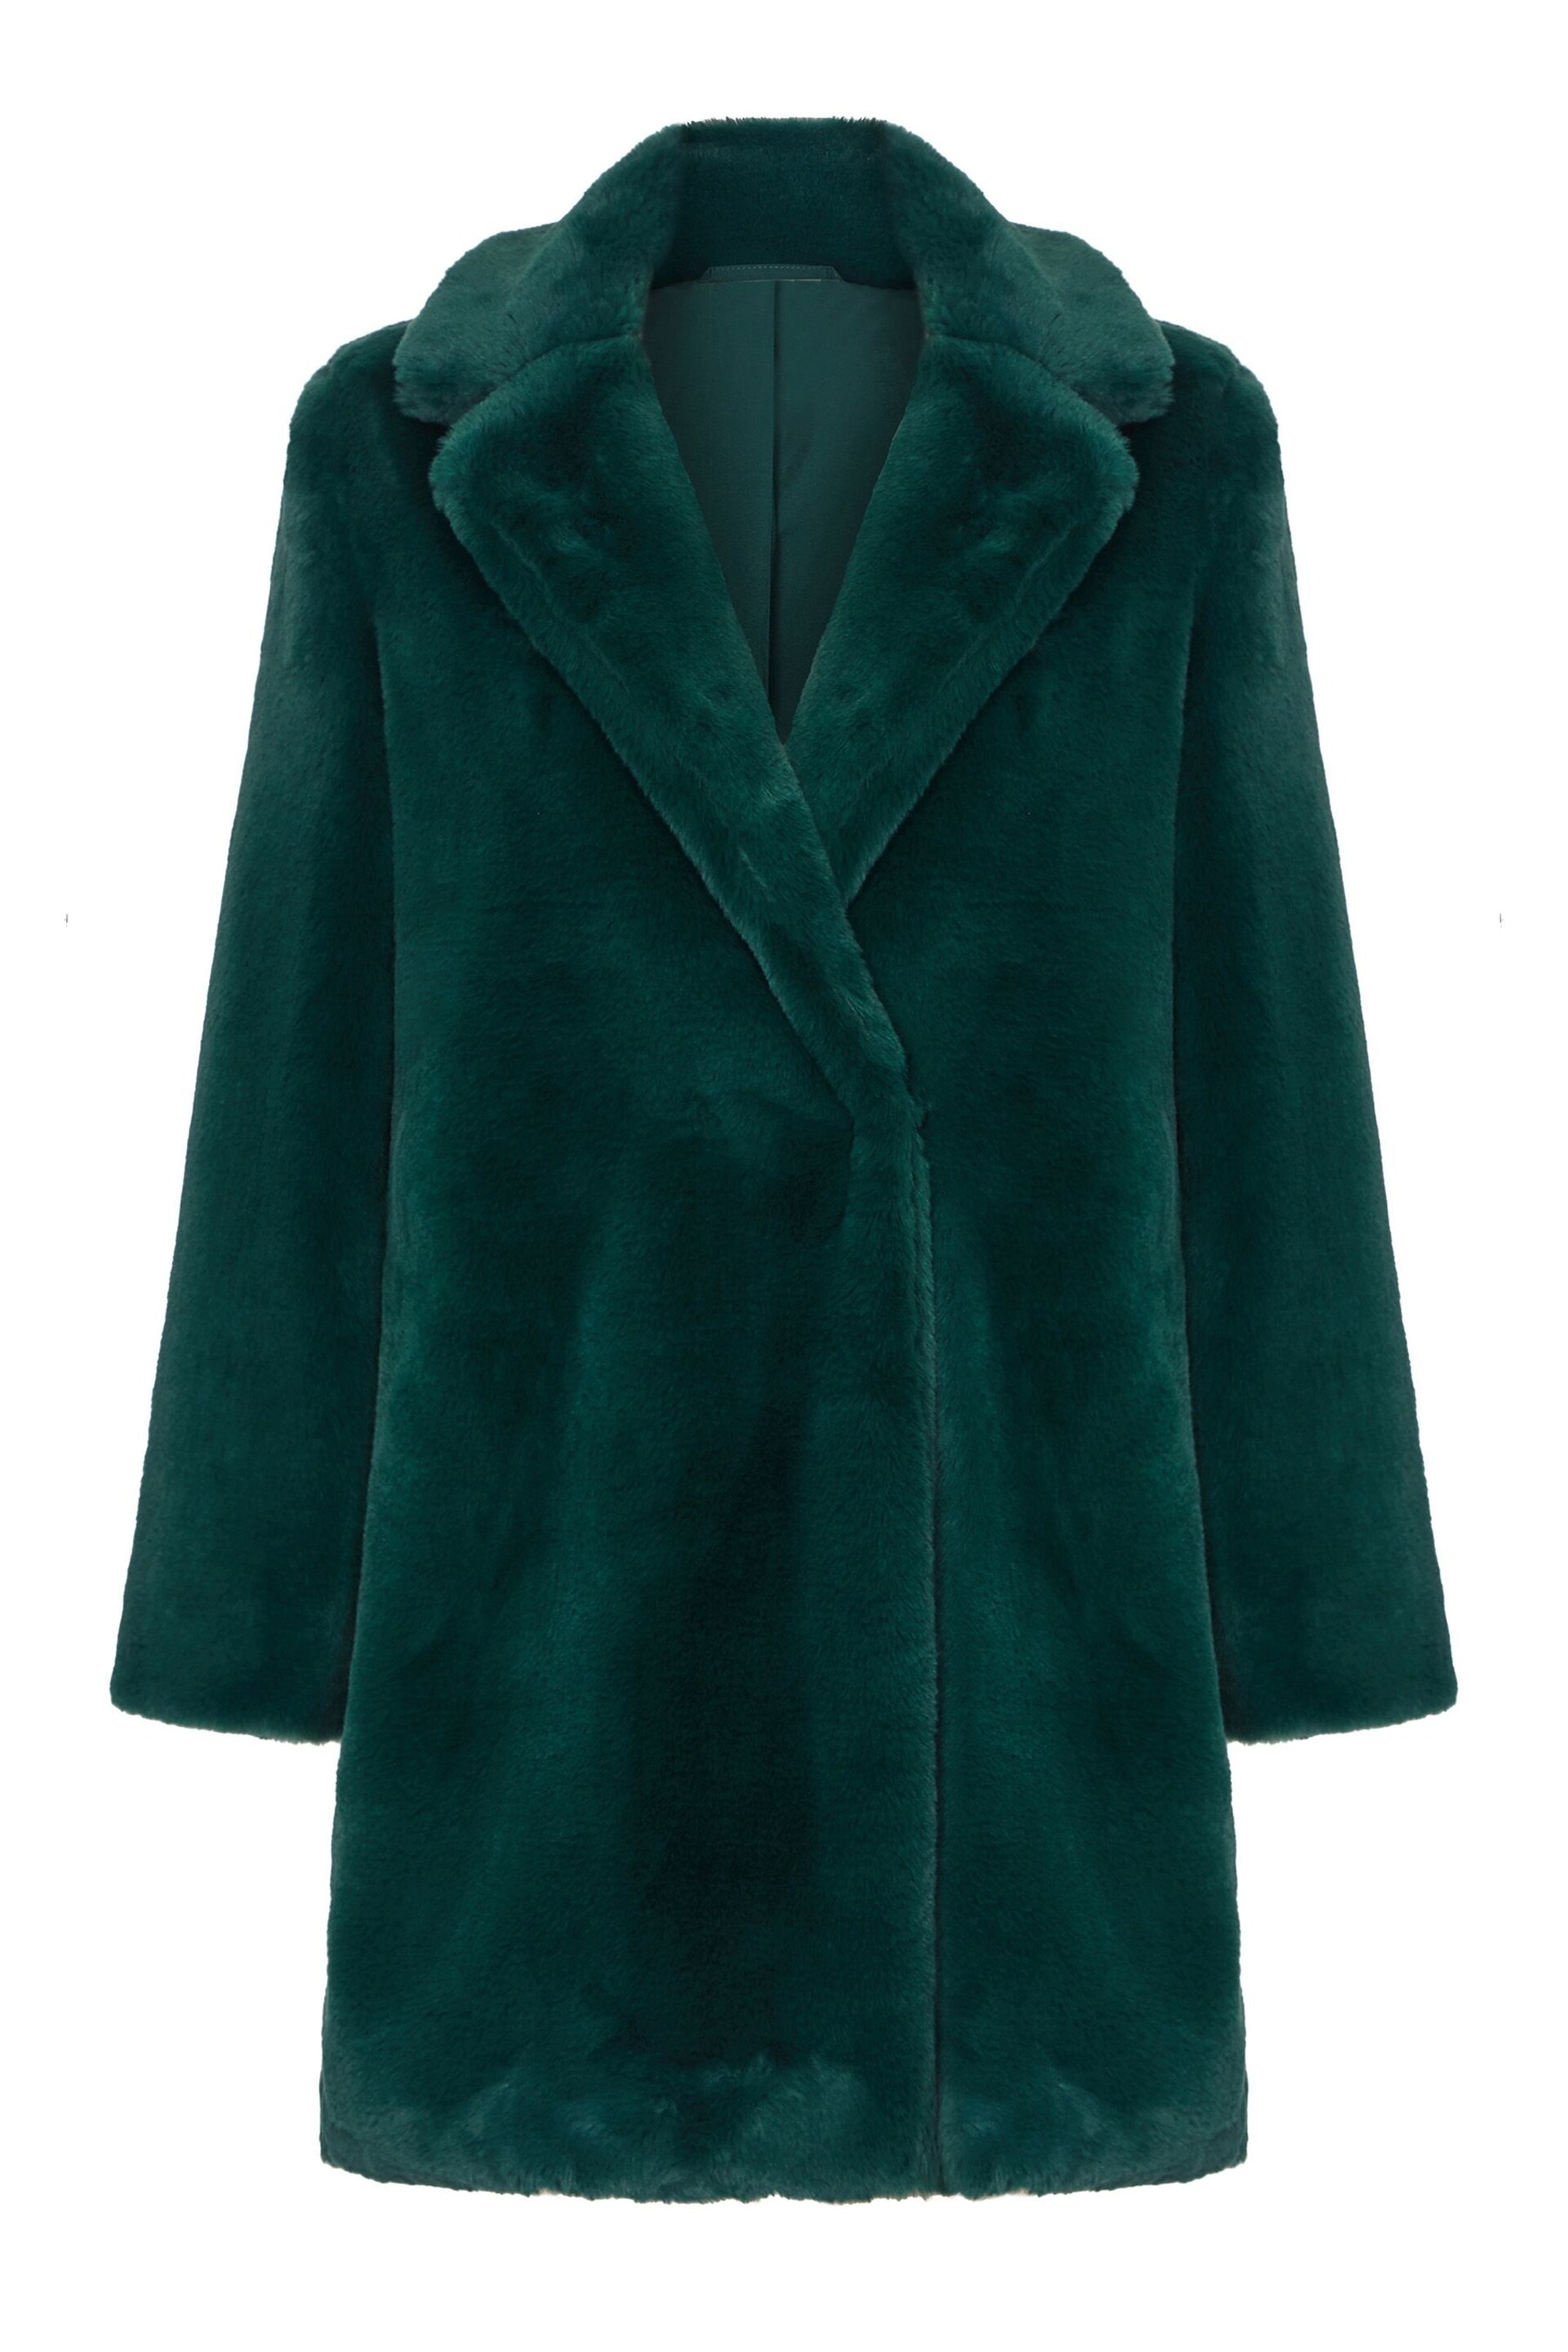 Yumi Green Velvet Faux Fur Coat - Image 5 of 5